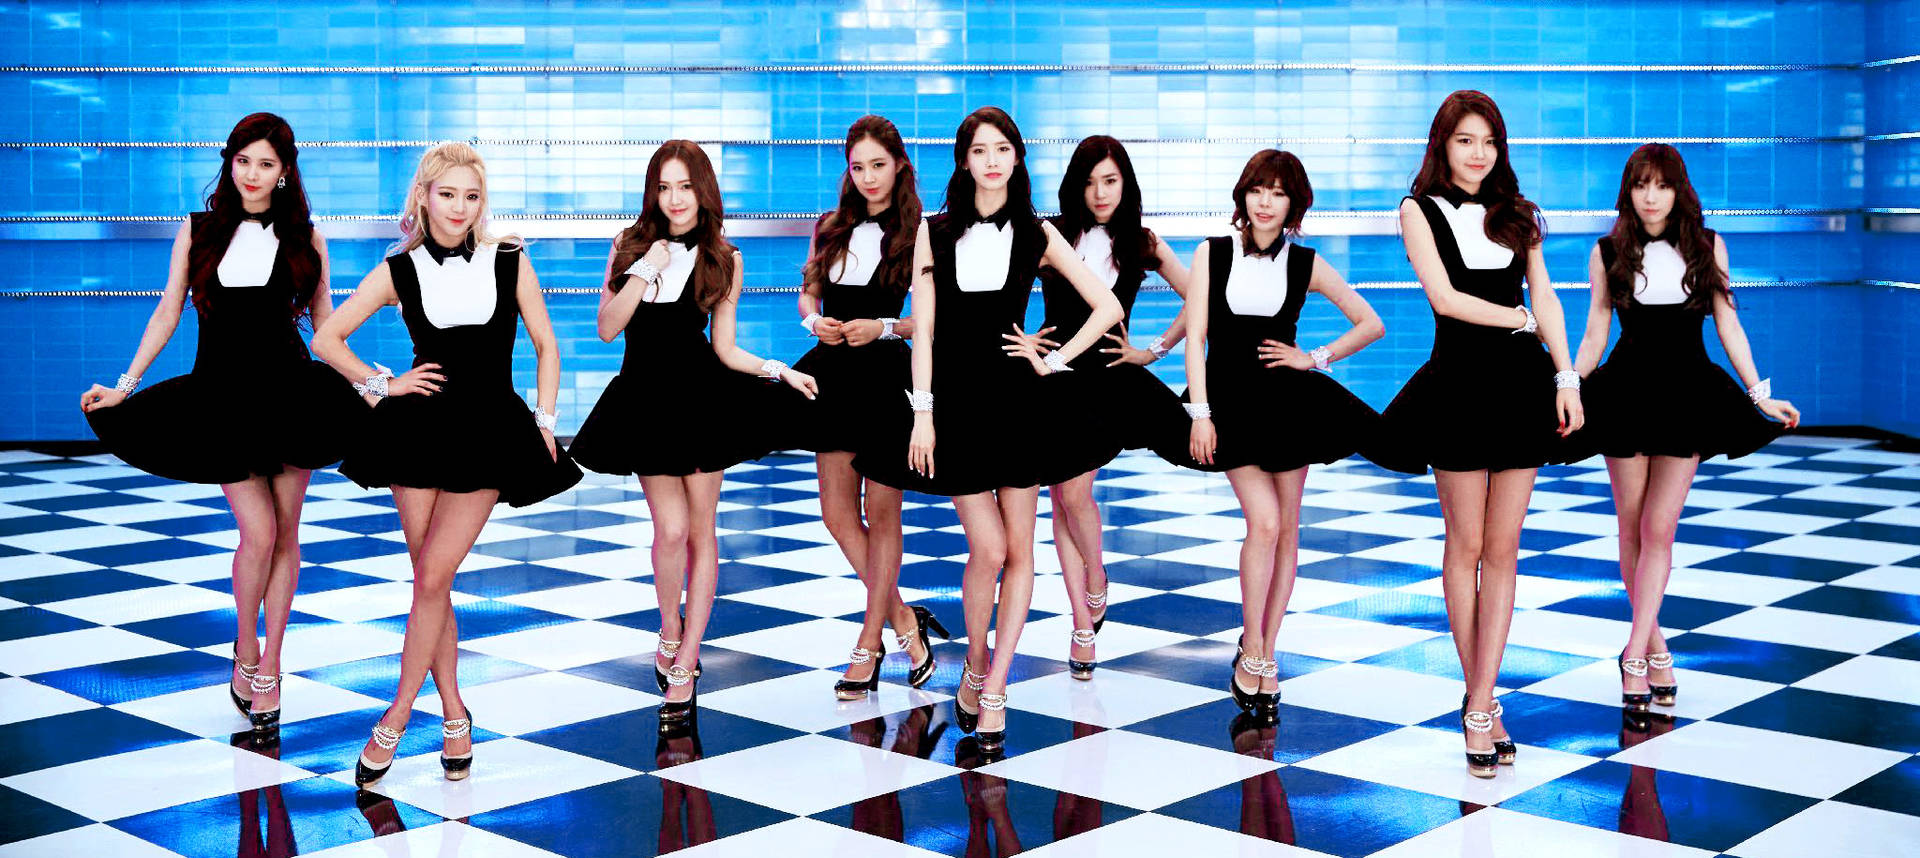 Girls' Generation Mr. Mr. Music Video Wallpaper